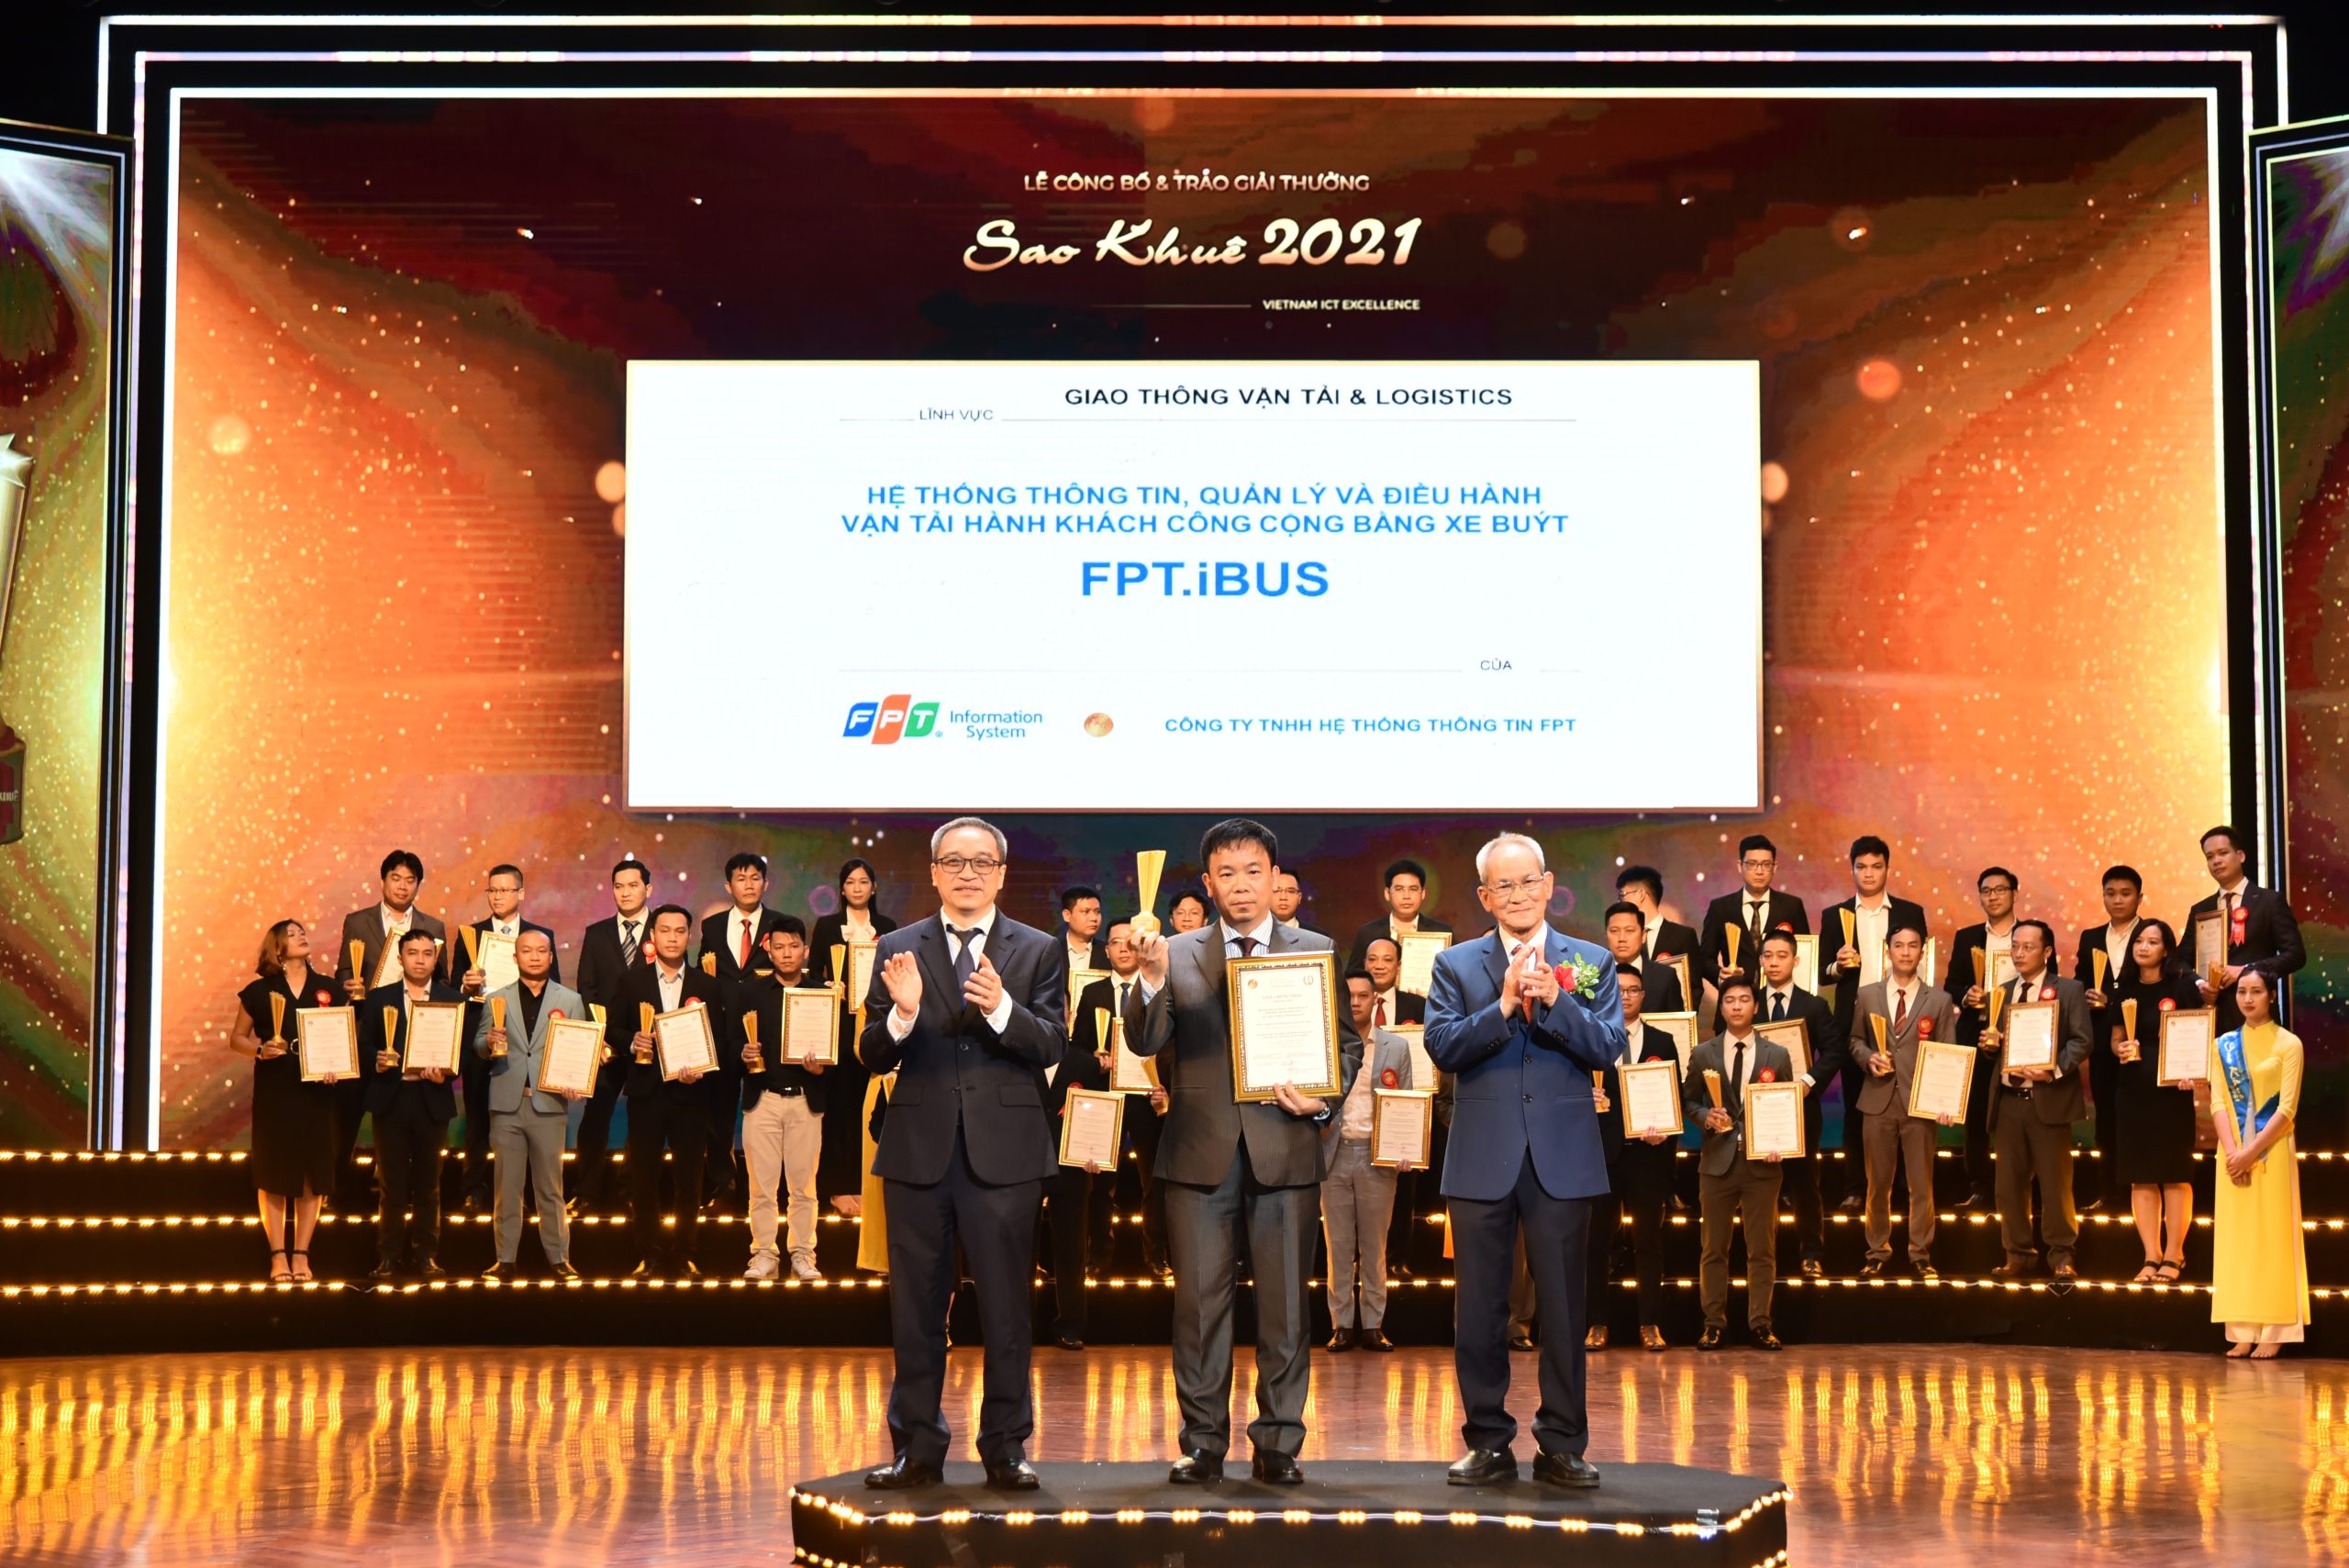 2021 Sao Khue Awards (Vietnam ICT Excellence) – Public Transportation Management System (FPT.iBus)